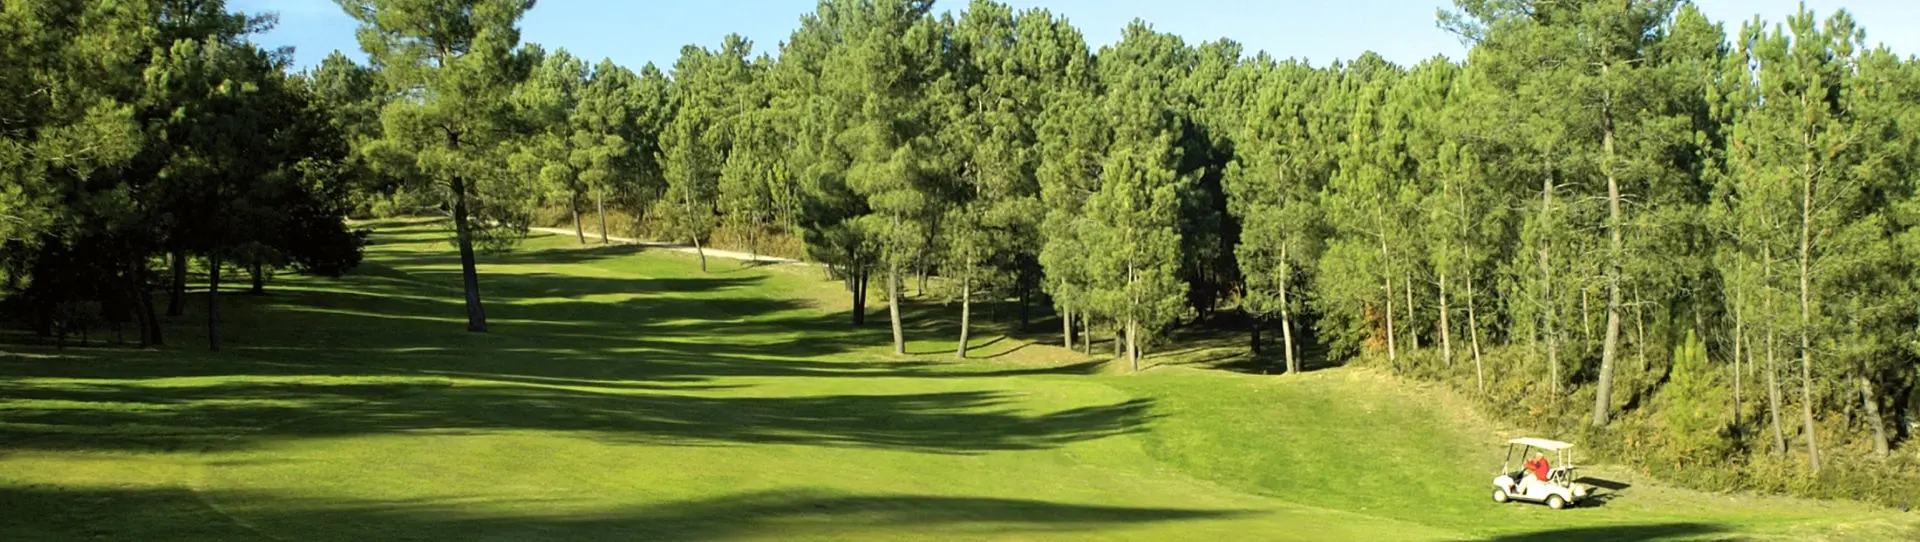 Portugal golf courses - Montebelo Golfe - Photo 1